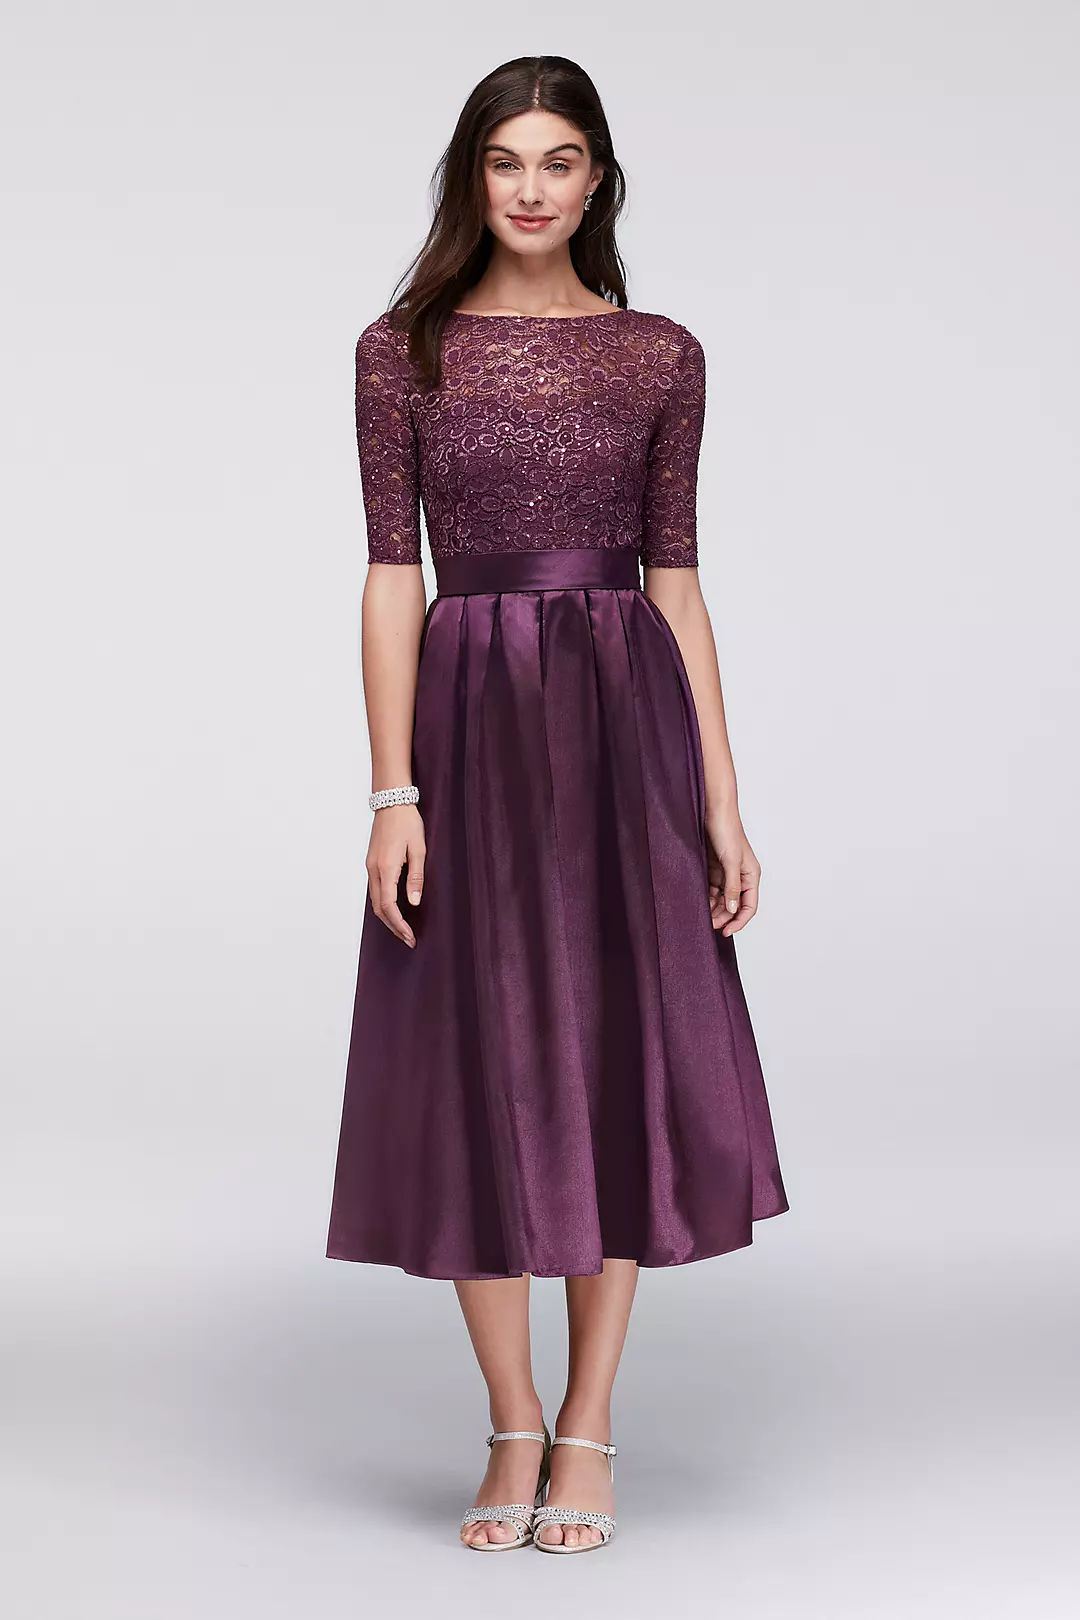 Lace and Satin Elbow-Sleeve Tea Length Dress Image